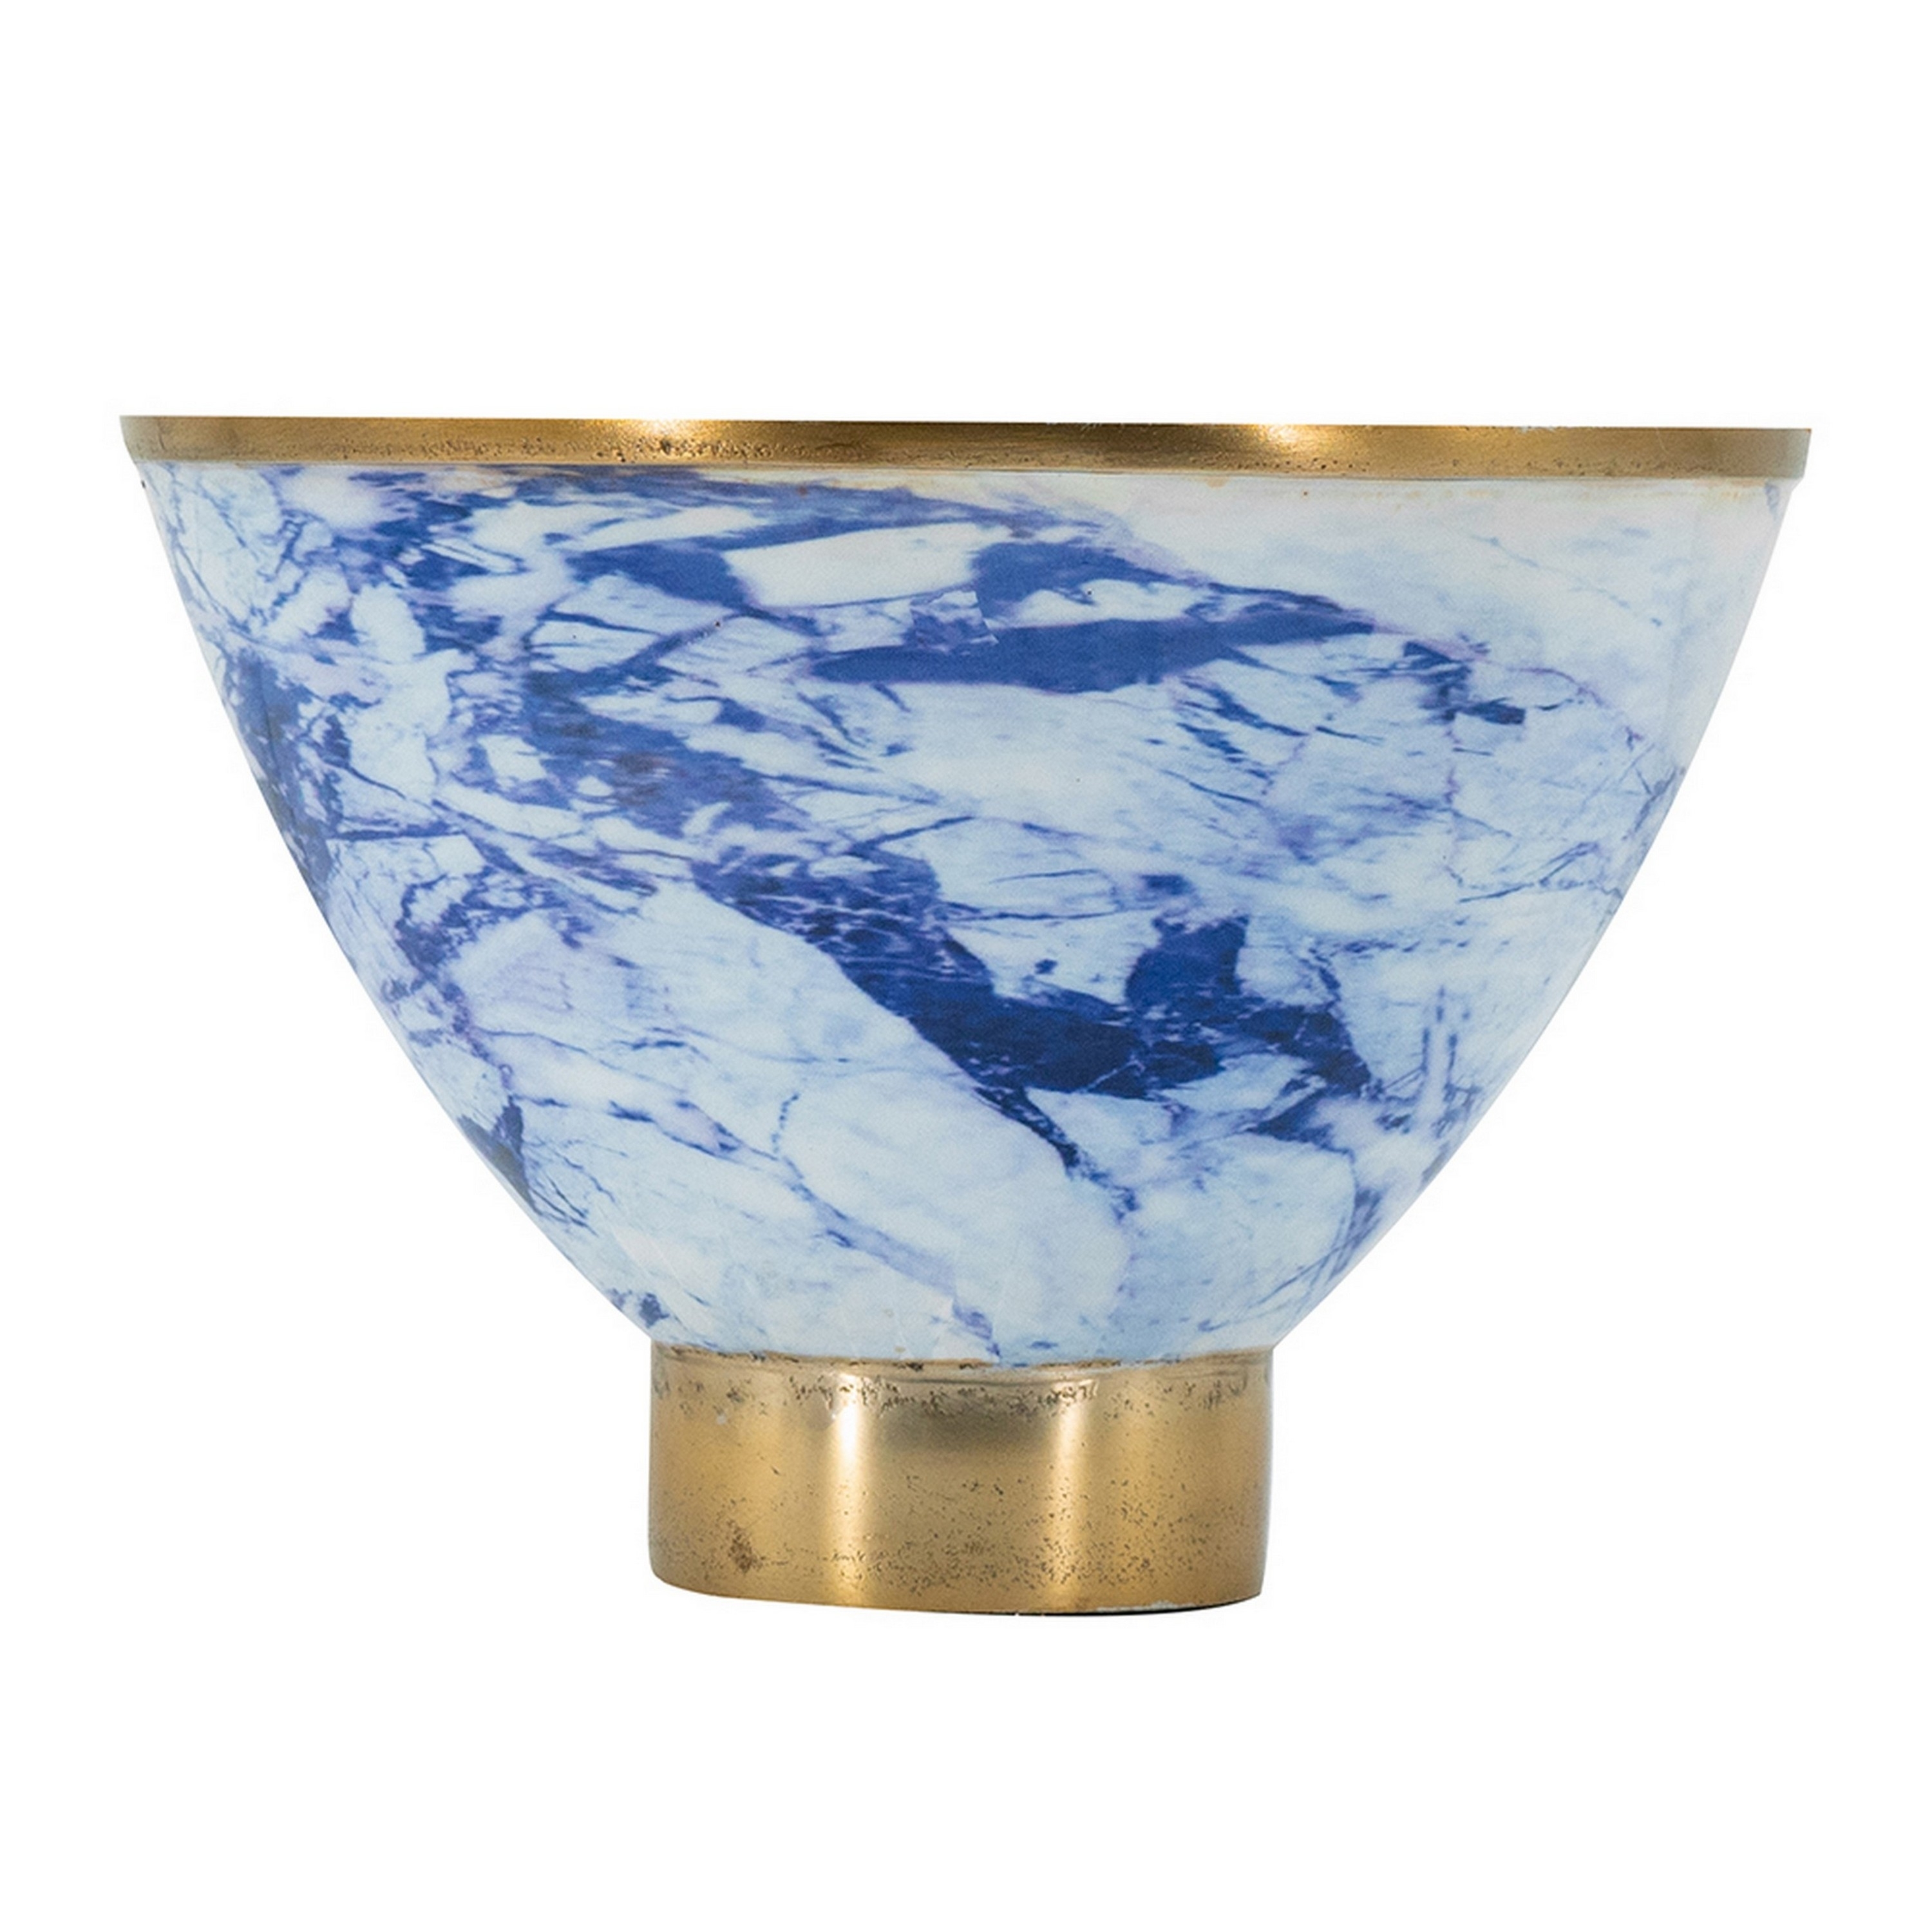 10 Inch Decorative Bowl, Brushed Gold, Marble Inspired Blue, Aluminum- Saltoro Sherpi